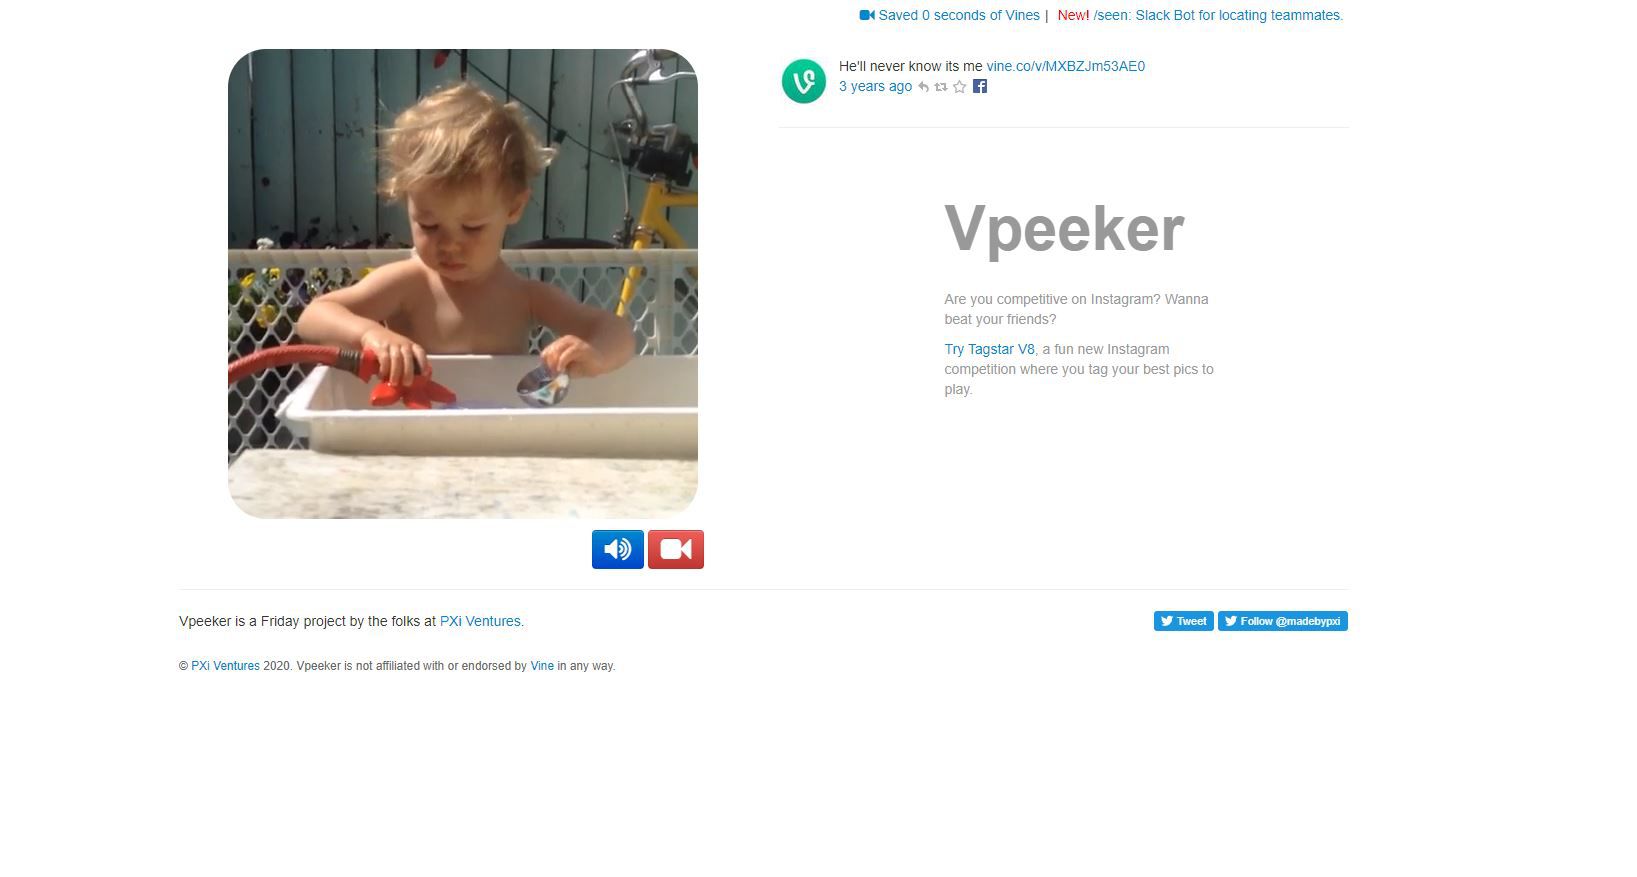 Vpeeker